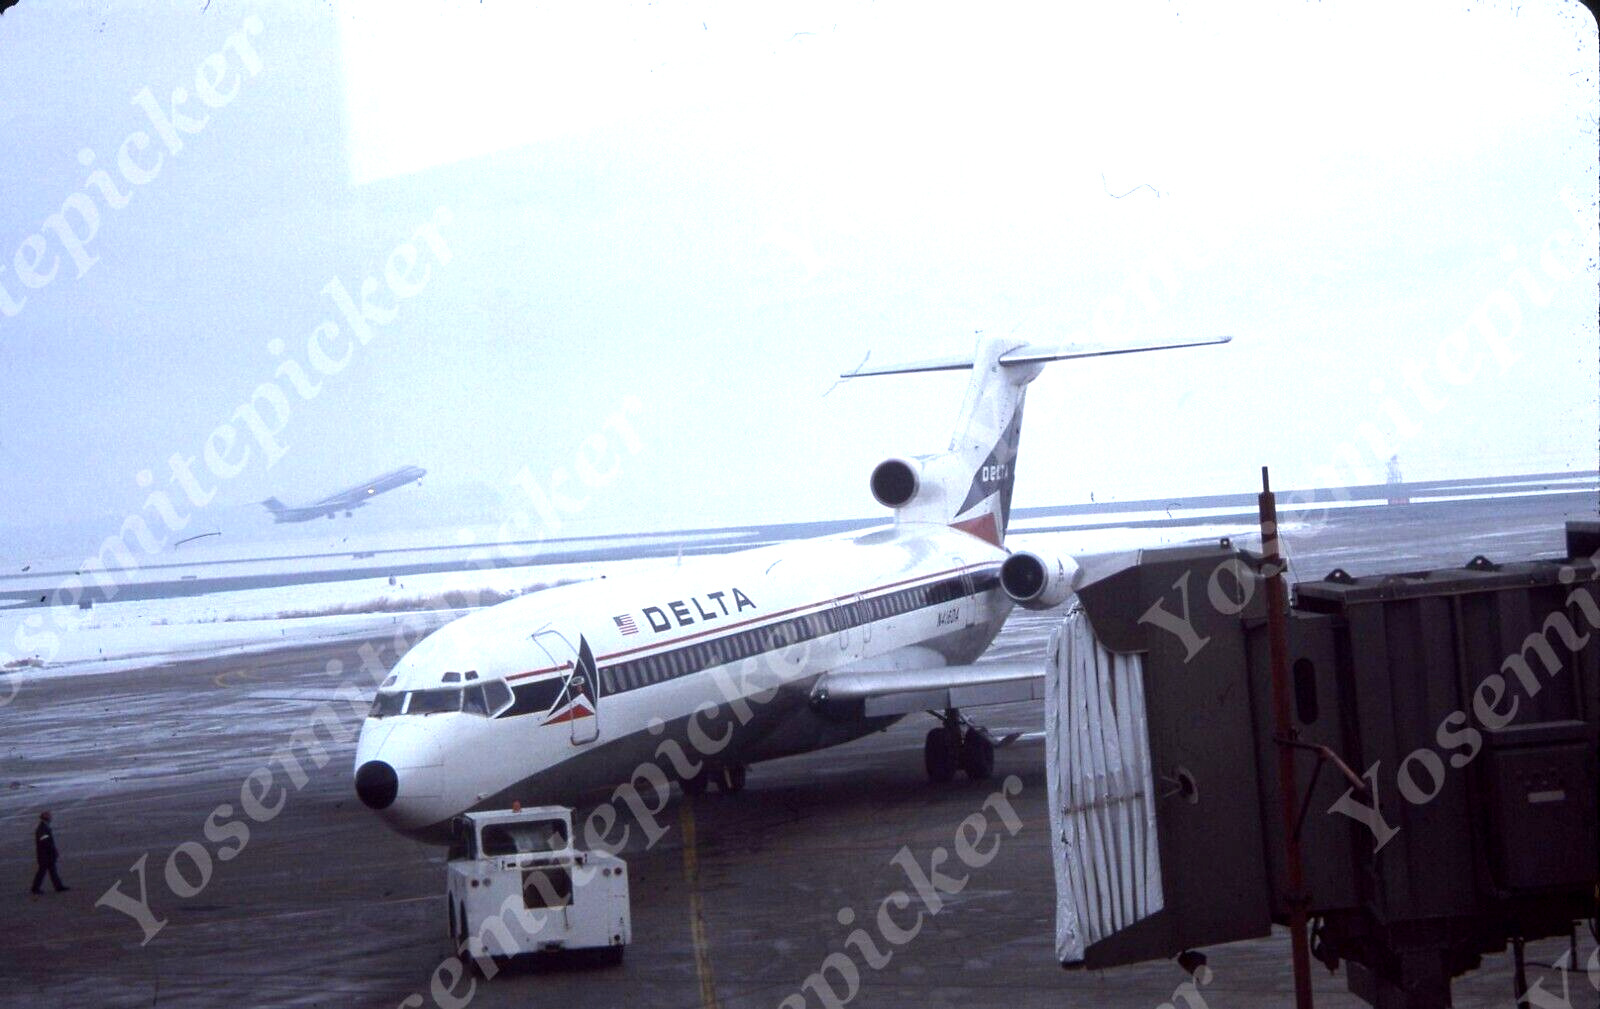 sl58 Original slide 1989 Delta Airlines airplane snow 483a